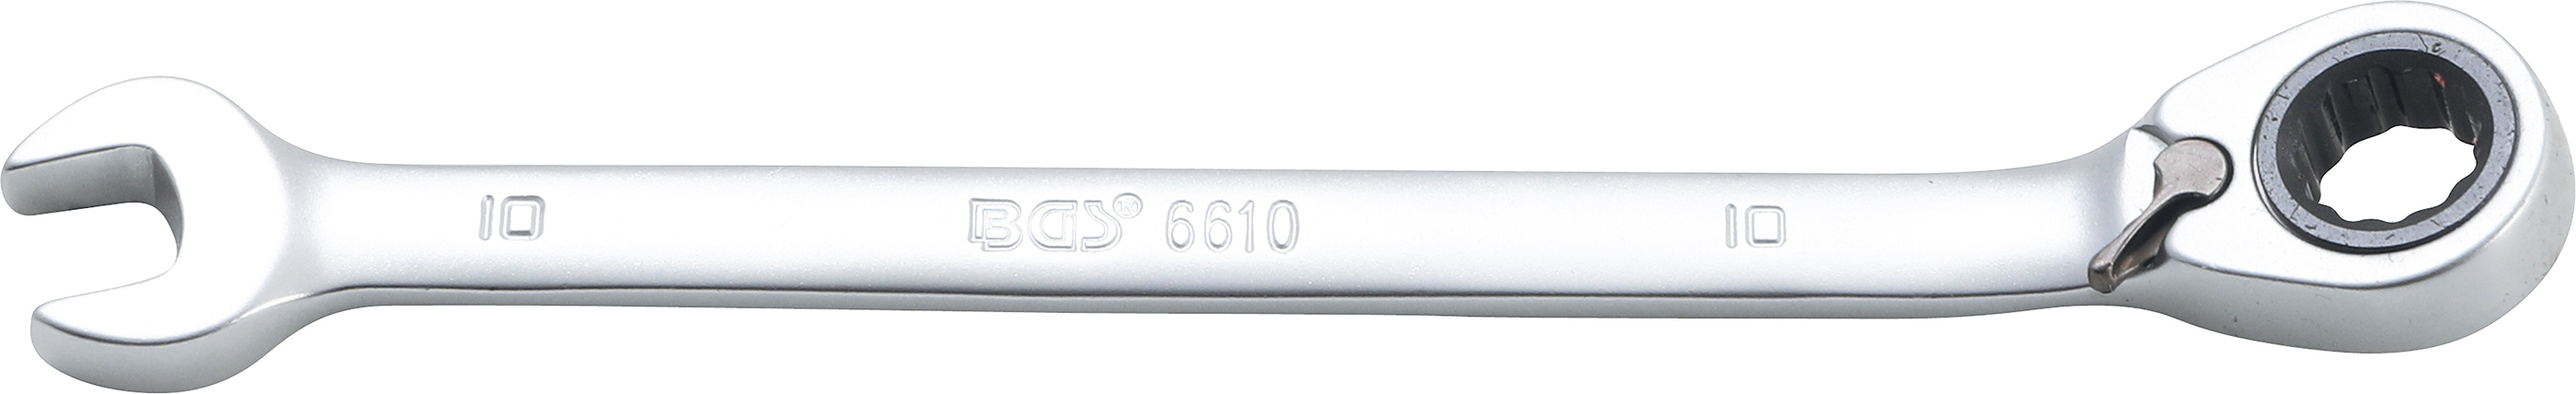 BGS 6610 Cheie combinata cu clichet 10 mm